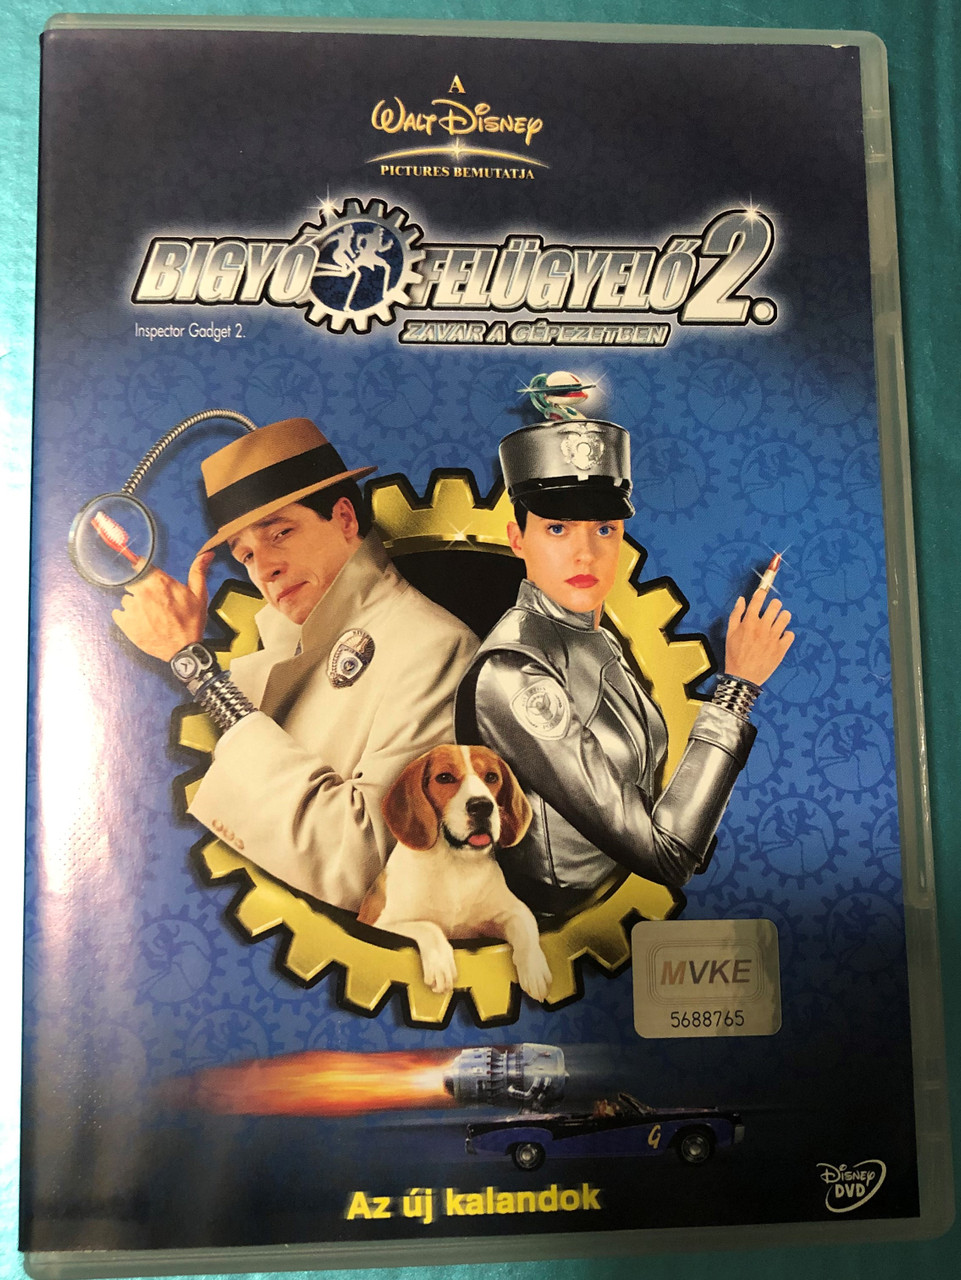 Inspector Gadget 2. DVD 1983 Gógyi felügyelő 2 / Directed by Alex Zamm /  Starring: French Stewart, Elaine Hendrix, D. L. Hughley - bibleinmylanguage